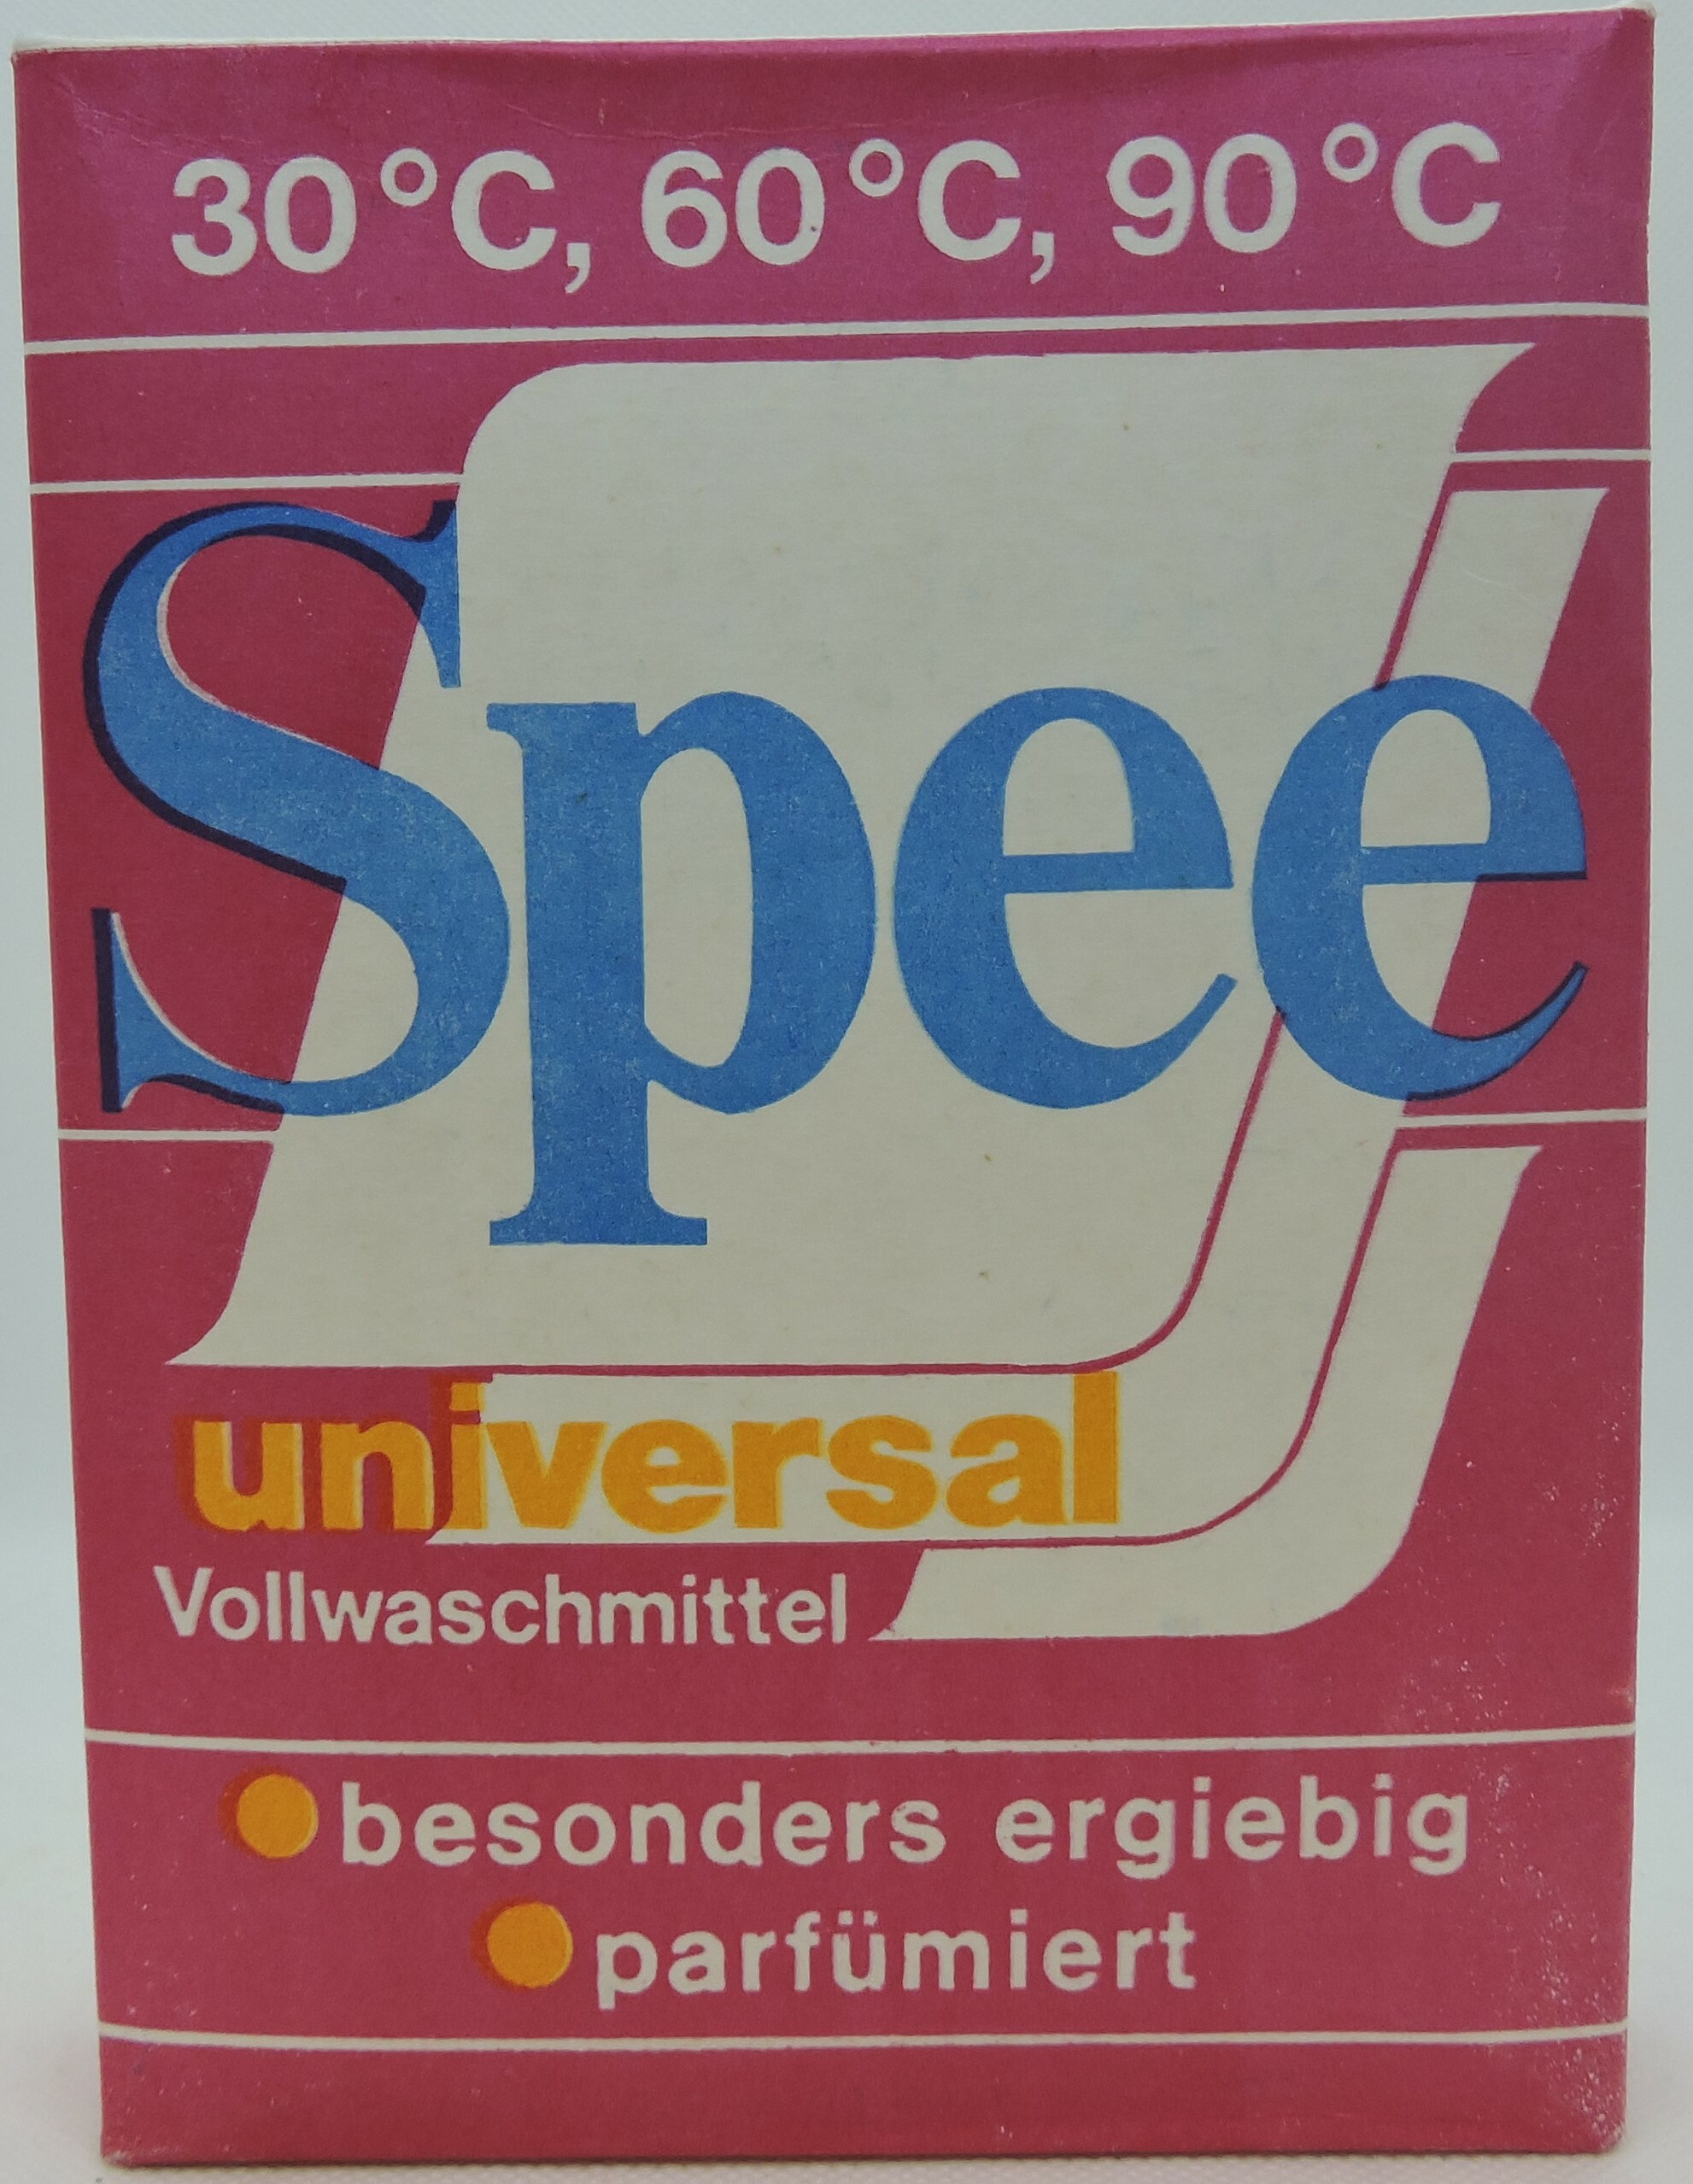 "Spee universal" Vollwaschmittel (Heimatverein Teltow CC BY-NC-SA)